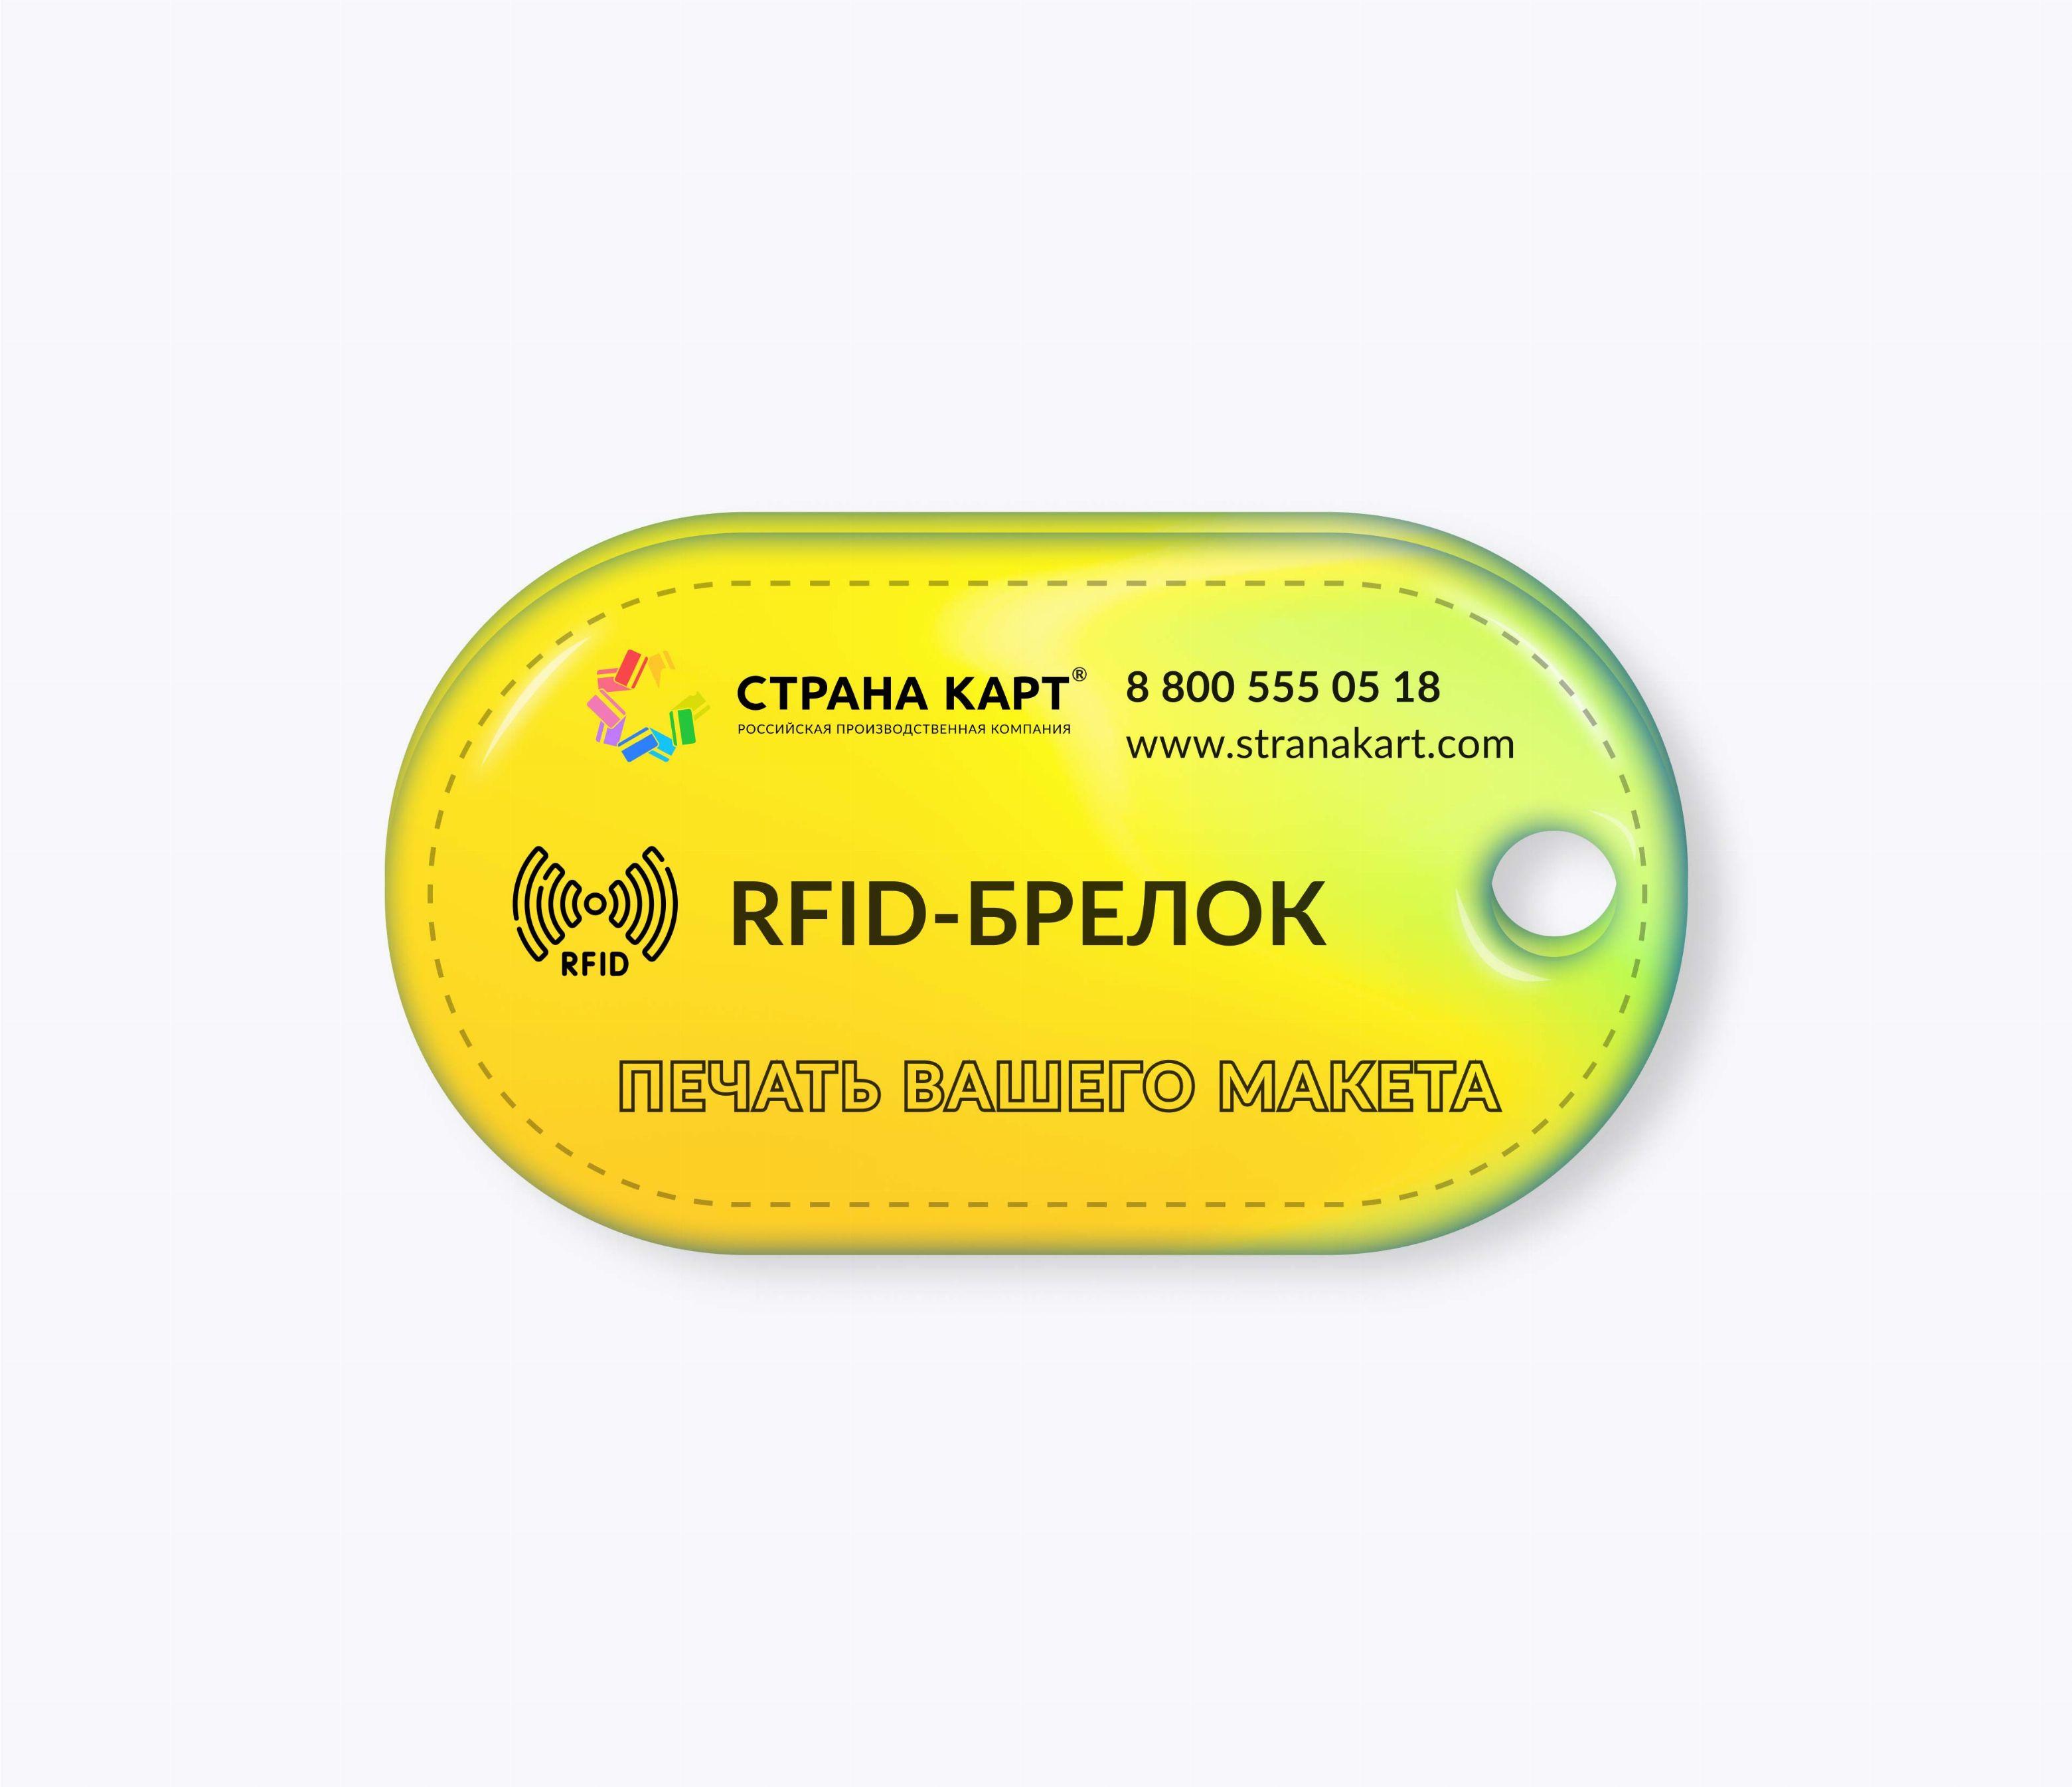 Овальные RFID-брелоки NEOKEY® с чипом NXP ICODE SLIX RFID-брелоки NEOKEY® с чипом NXP ICODE SLIX и вашим логотипом